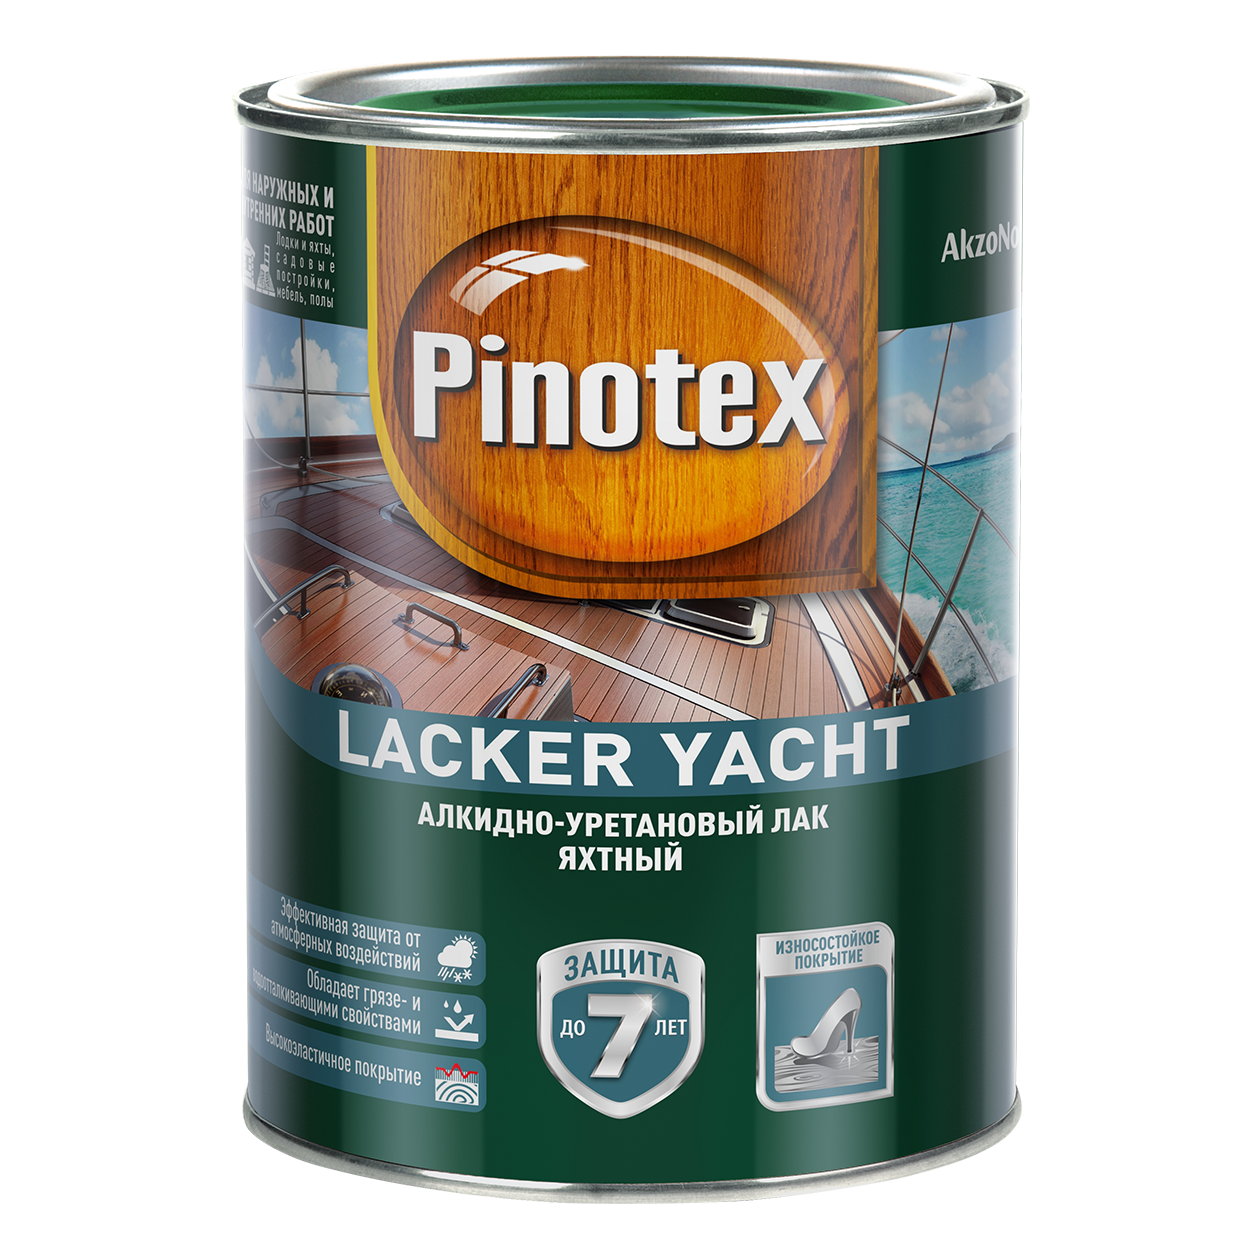 Яхтный лак Pinotex Lacker Yacht 90 (1л) глянц.